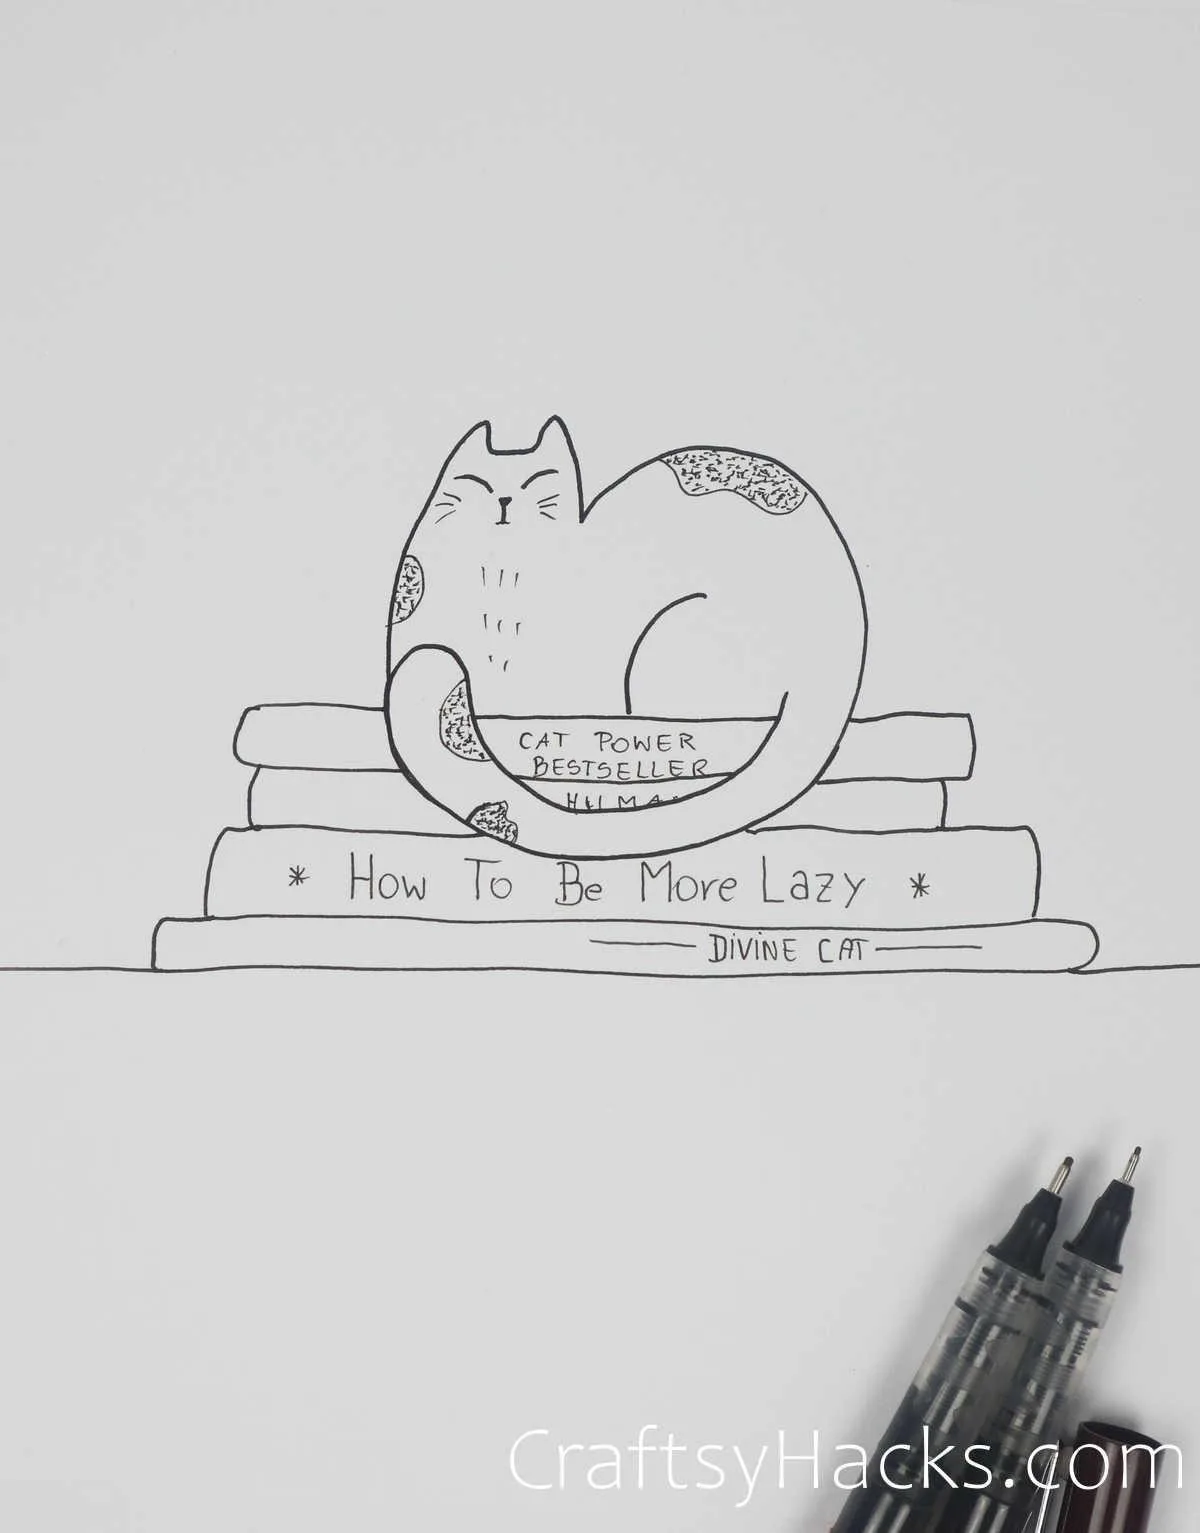 bookstore or literary cat